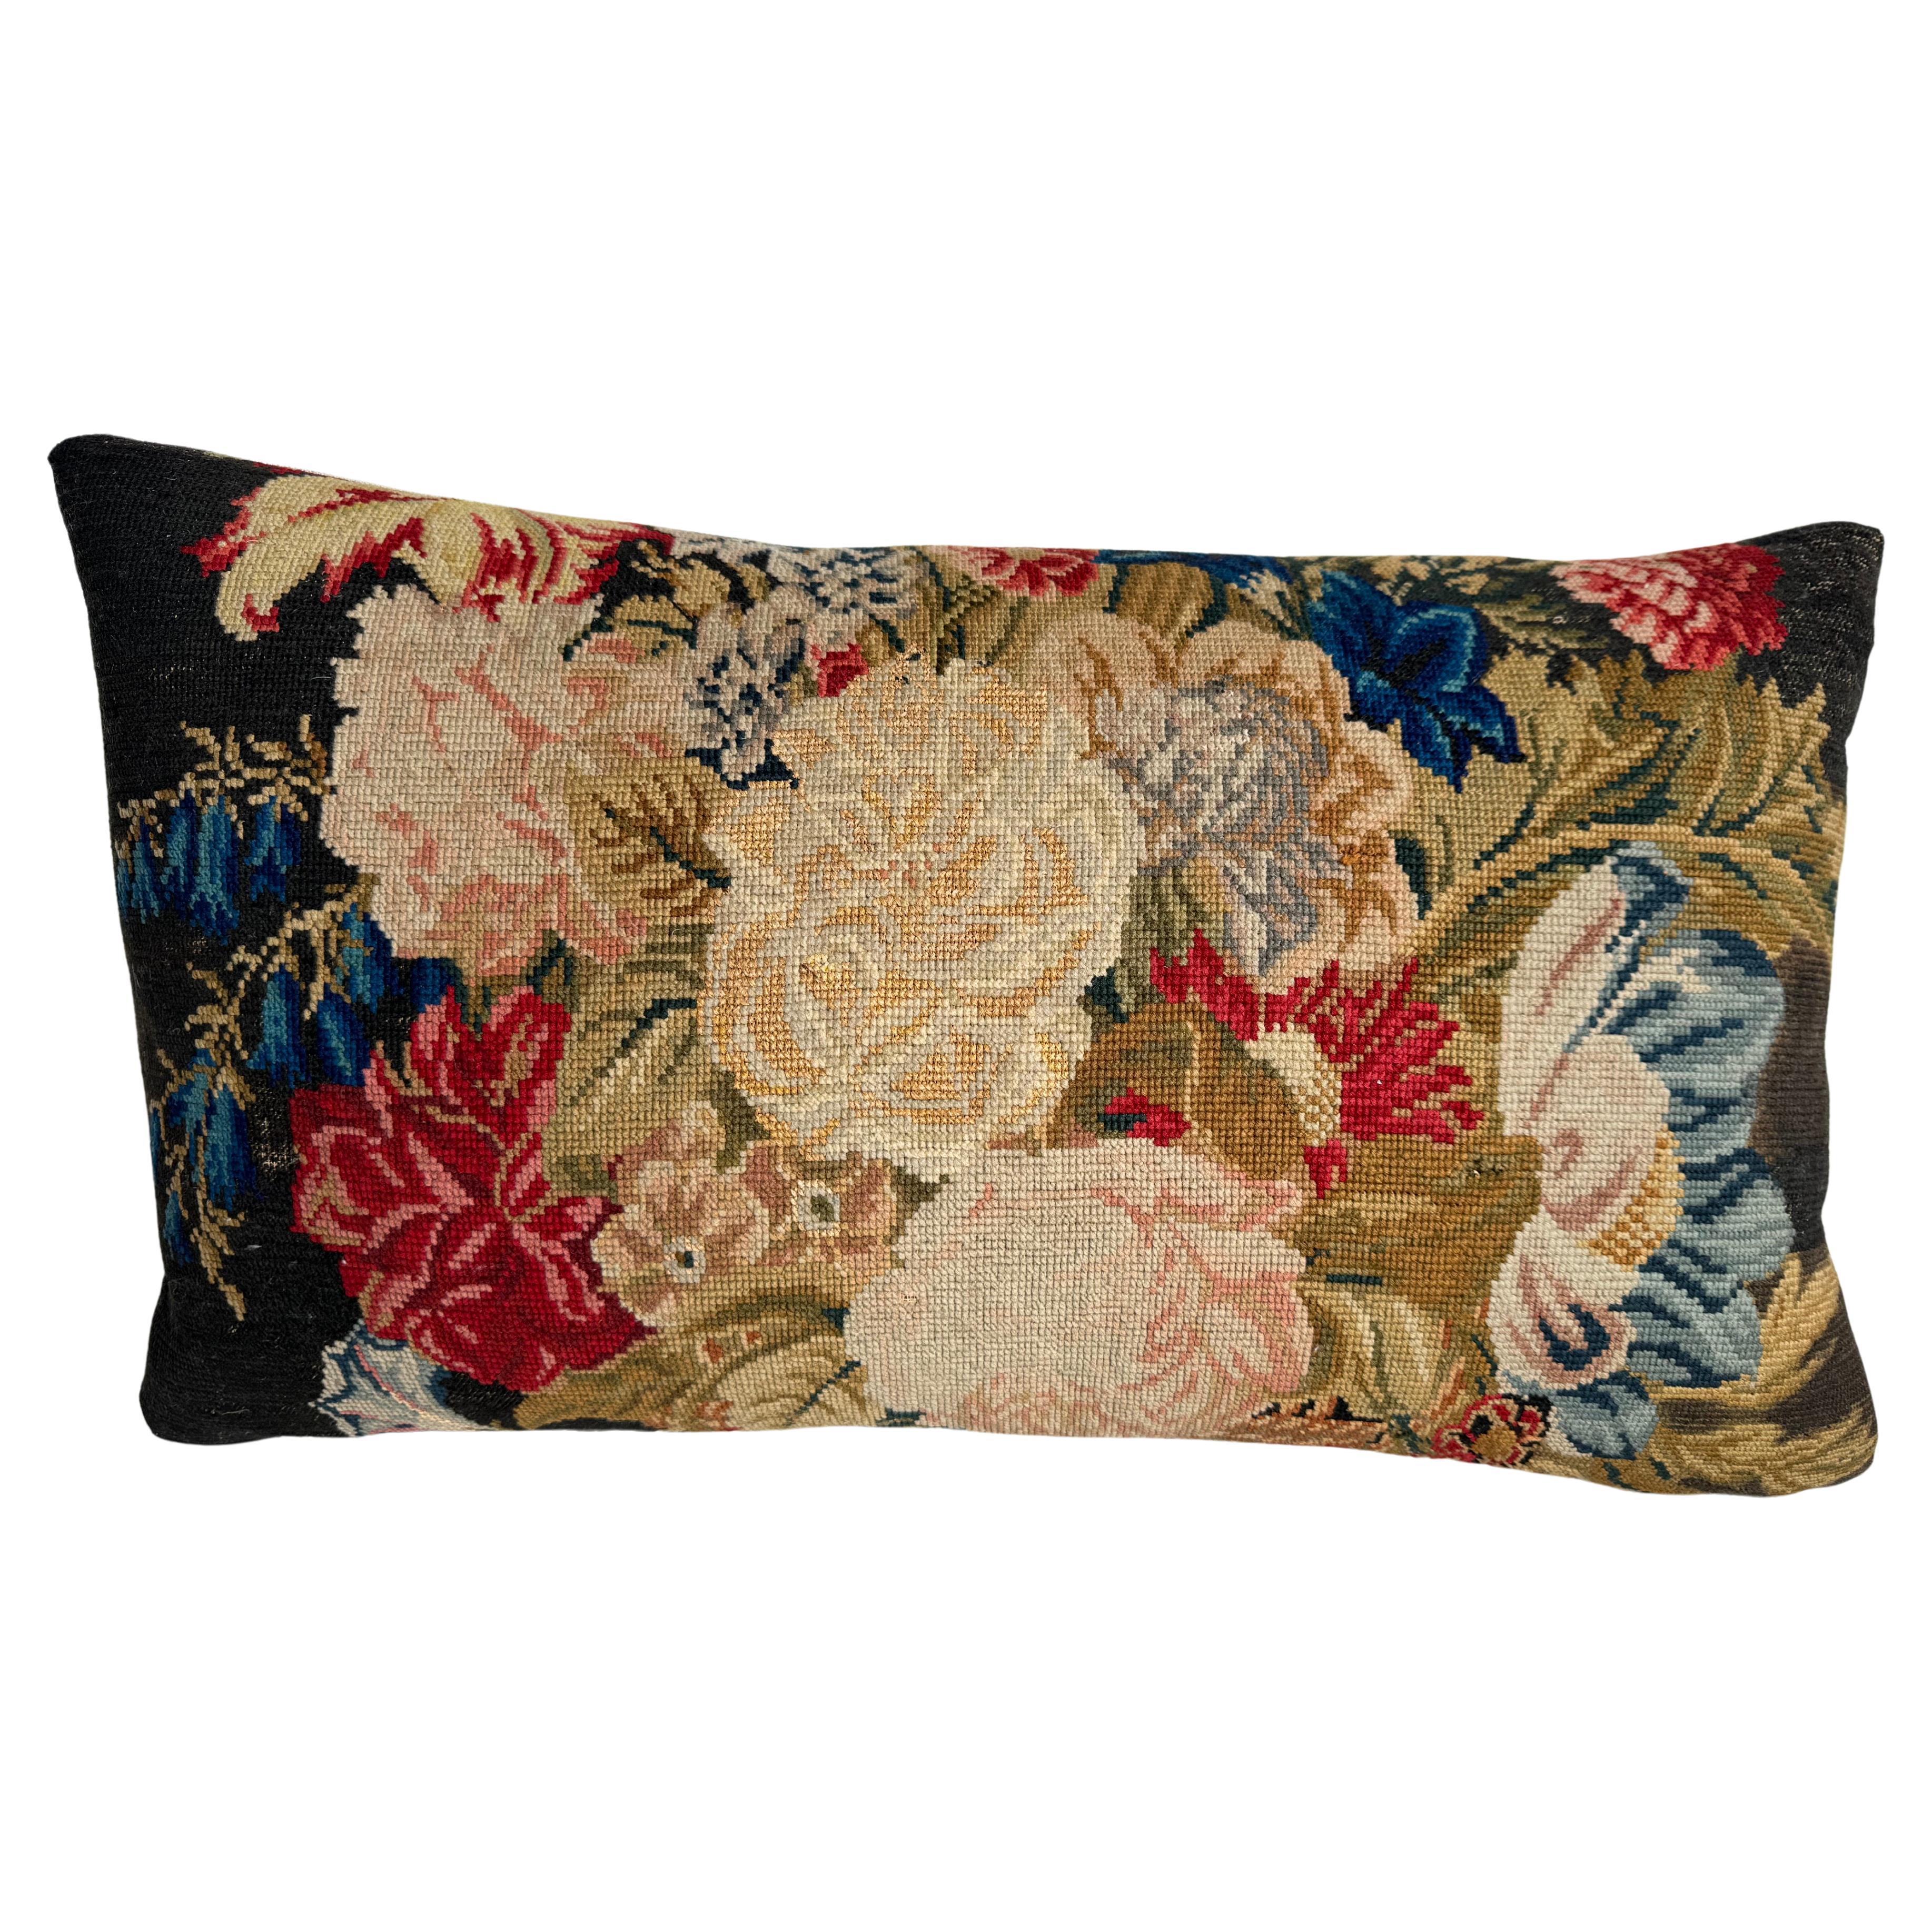 English Needlework Pillow 1850 - 21" x 12" For Sale